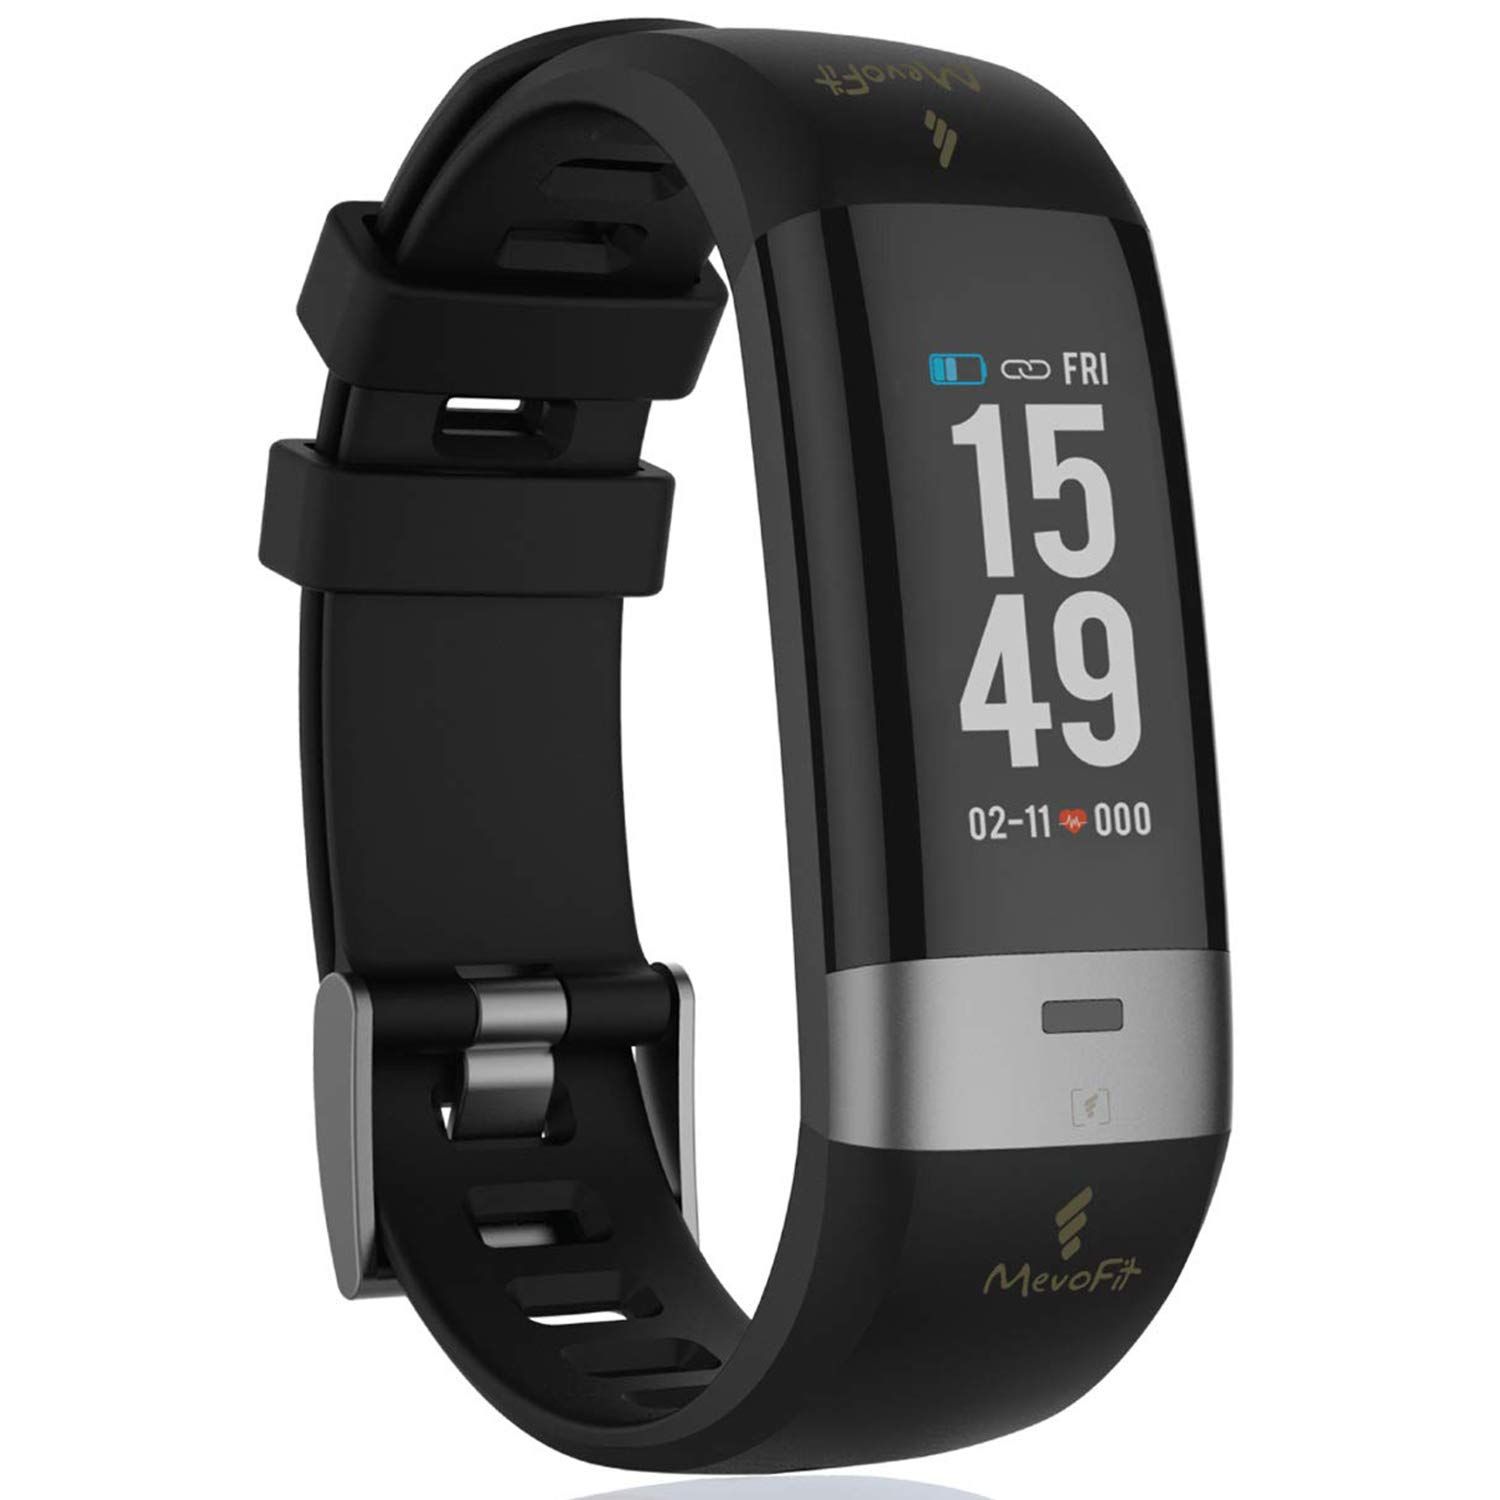 MevoFit Care Smartwatch: Fitness Smartwatch an Activity Tracker for Men and Women [Black]